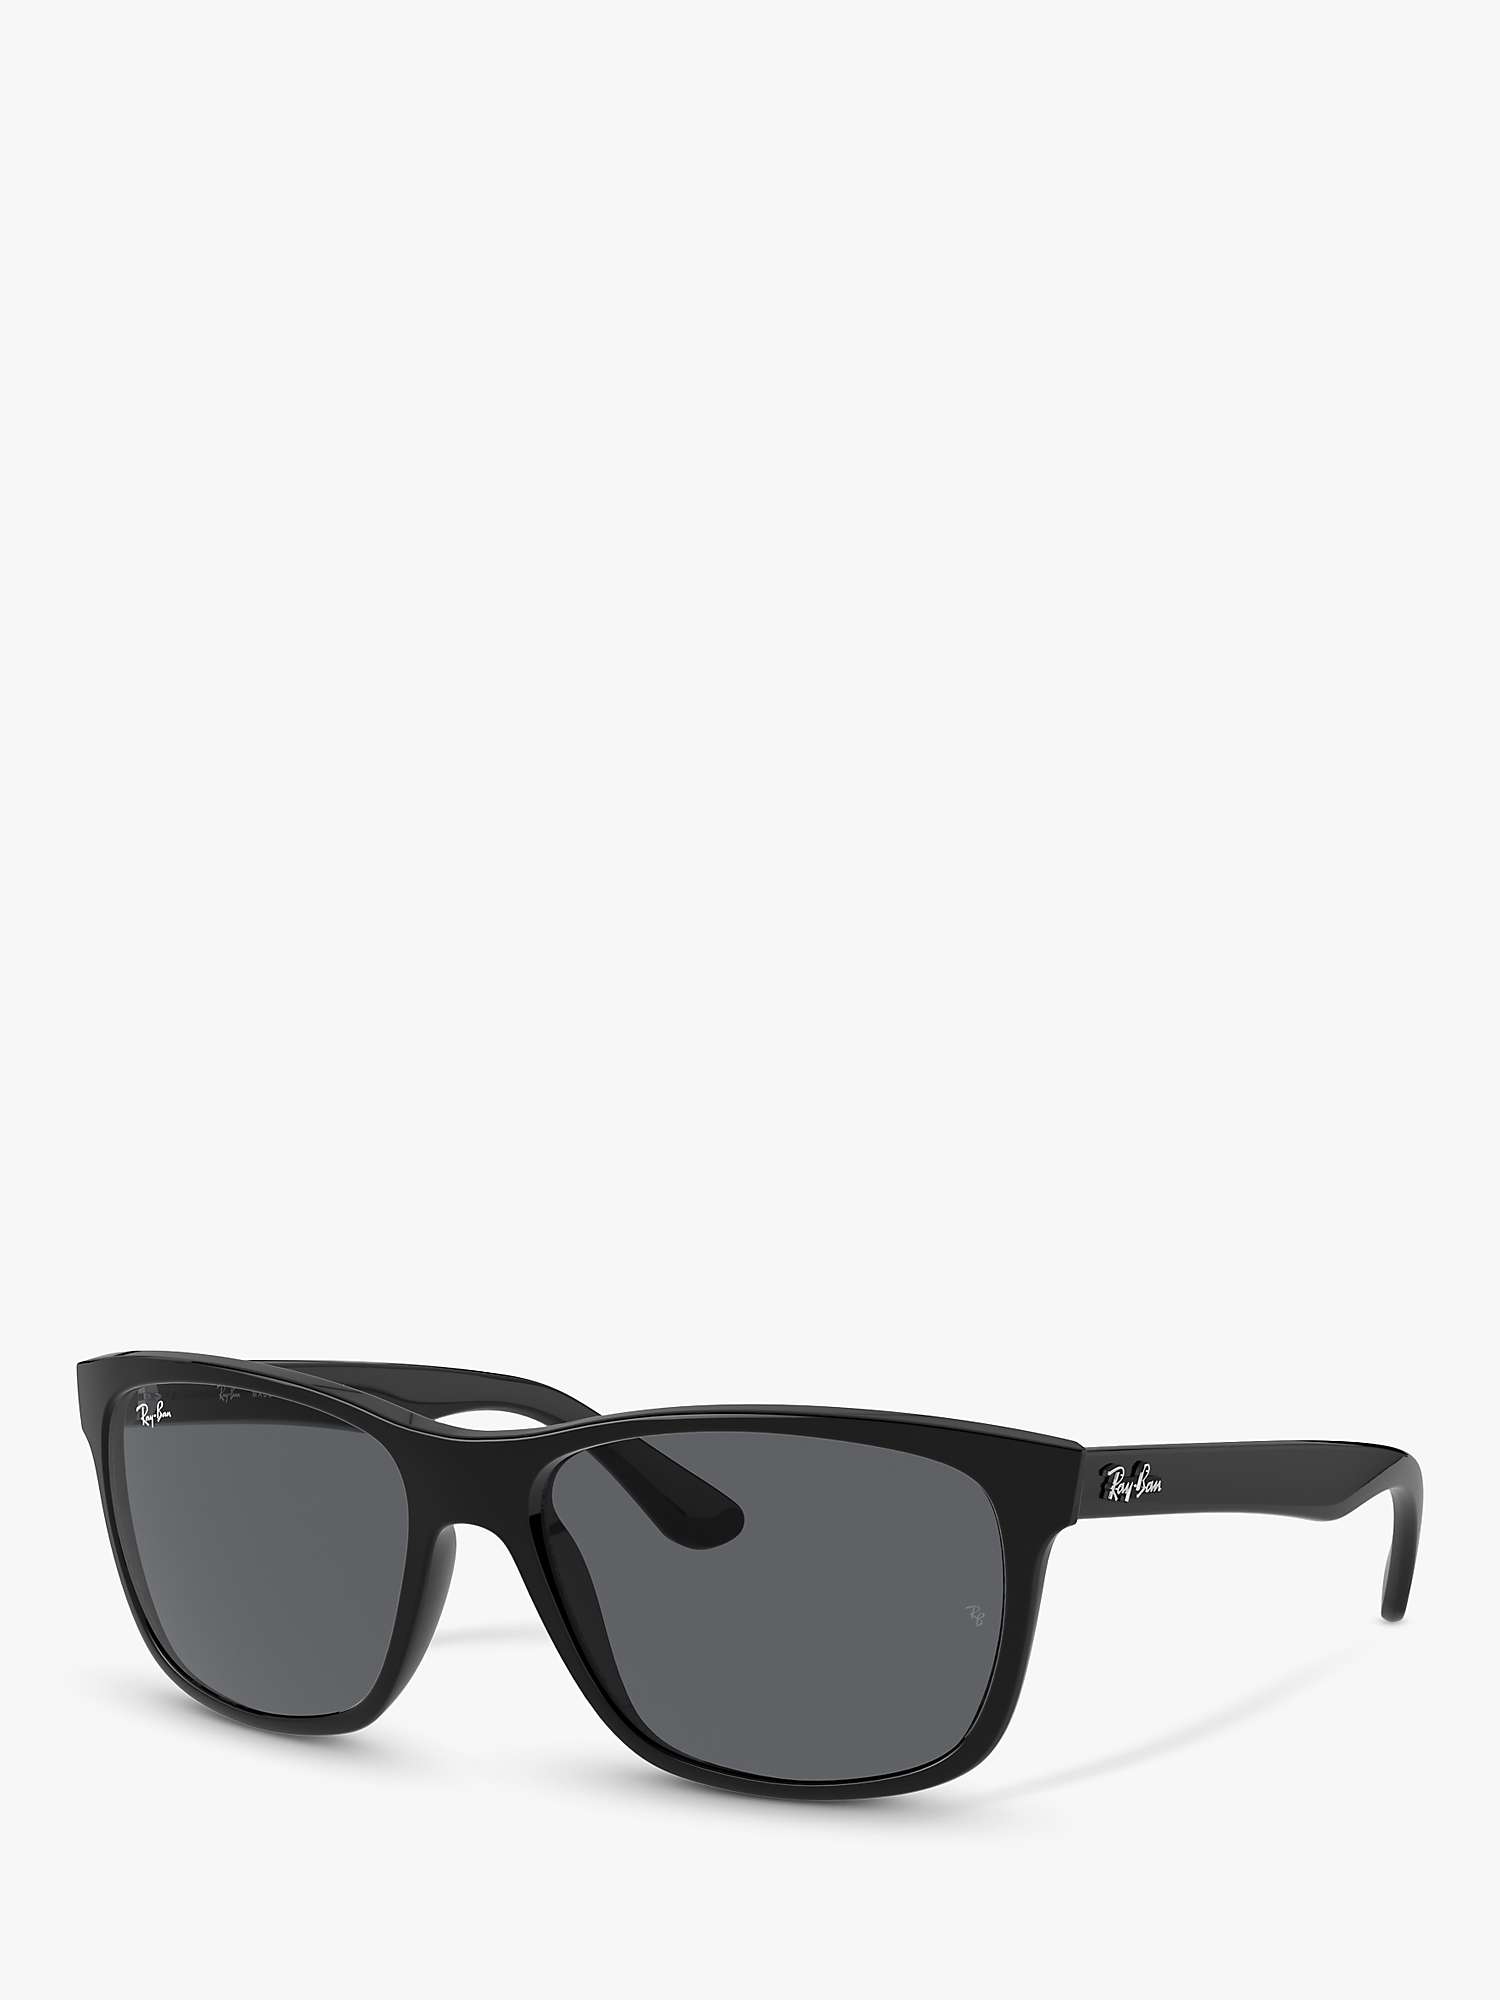 Buy Ray-Ban RB4181 Men's D-Frame Sunglasses Online at johnlewis.com